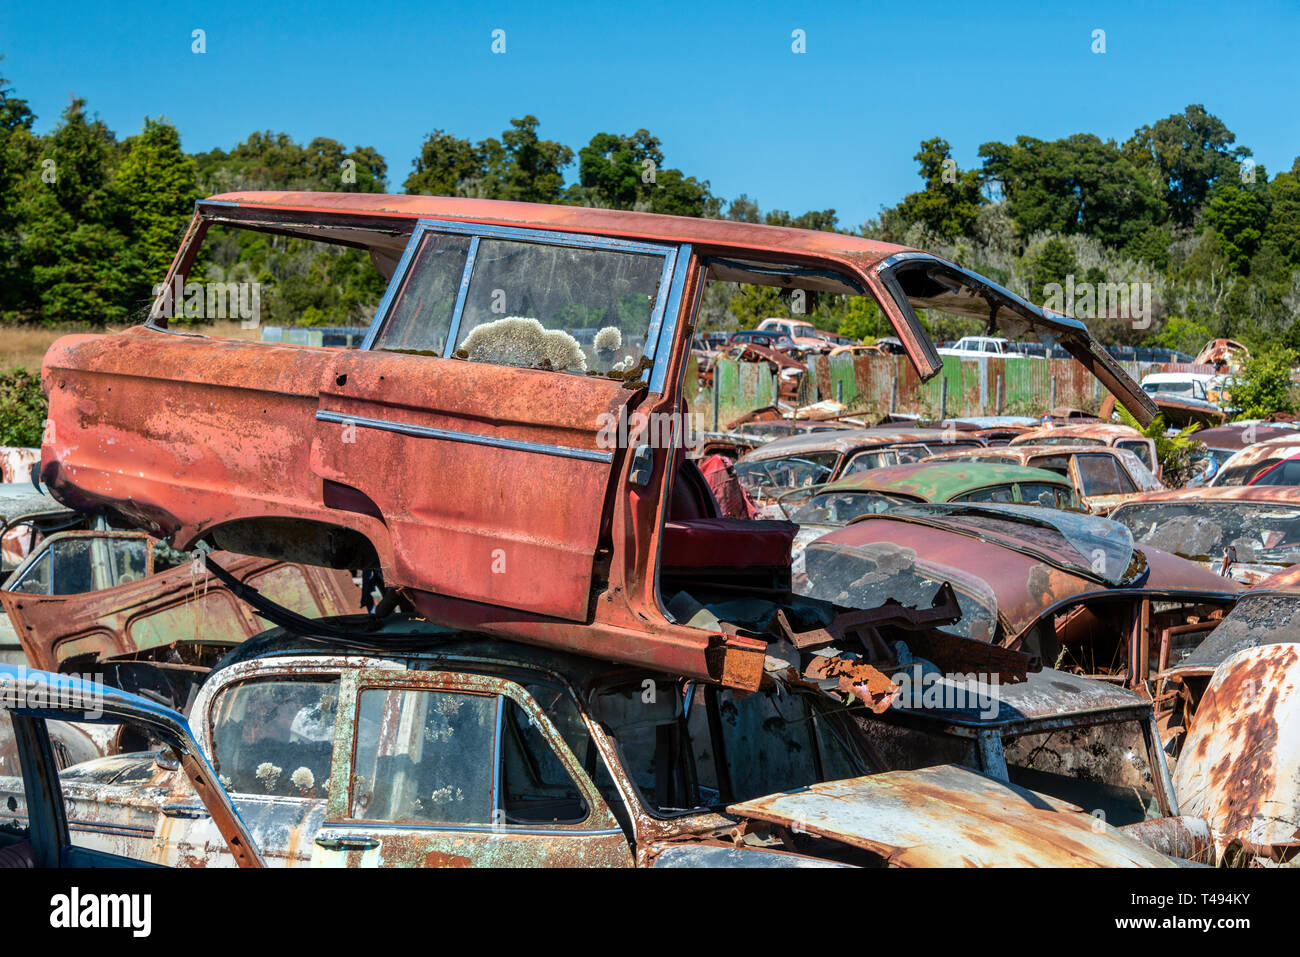 An abandoned rusted and broken Ford Falcon estate, car in a car wrecking yard. Horopito Motors, or 'Smash Palace', New Zealand Stock Photo